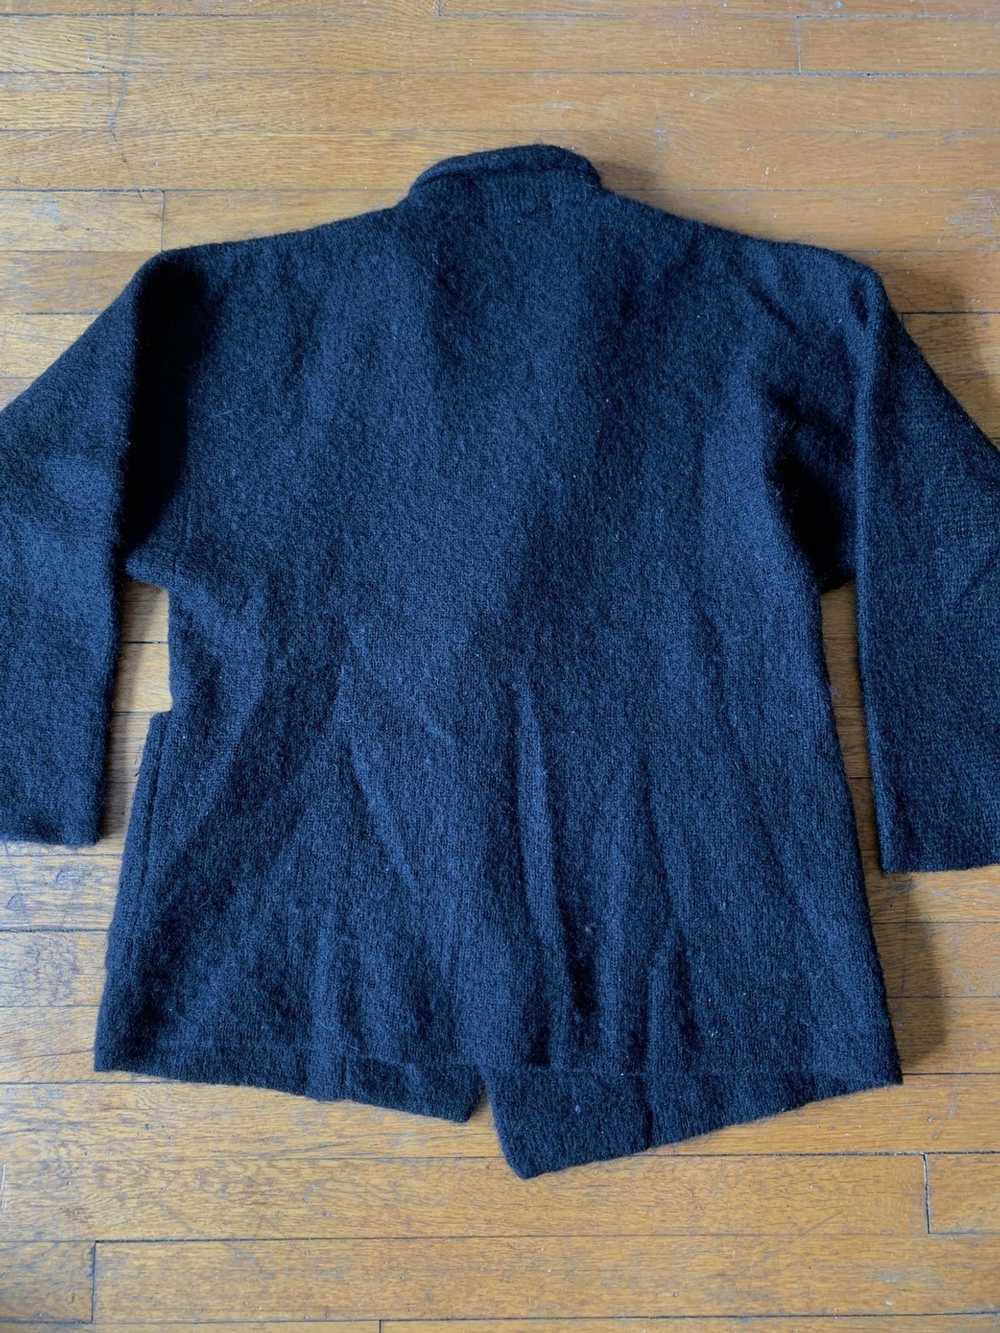 Vintage 80s Black Mohair Cardigan Sweater - image 5